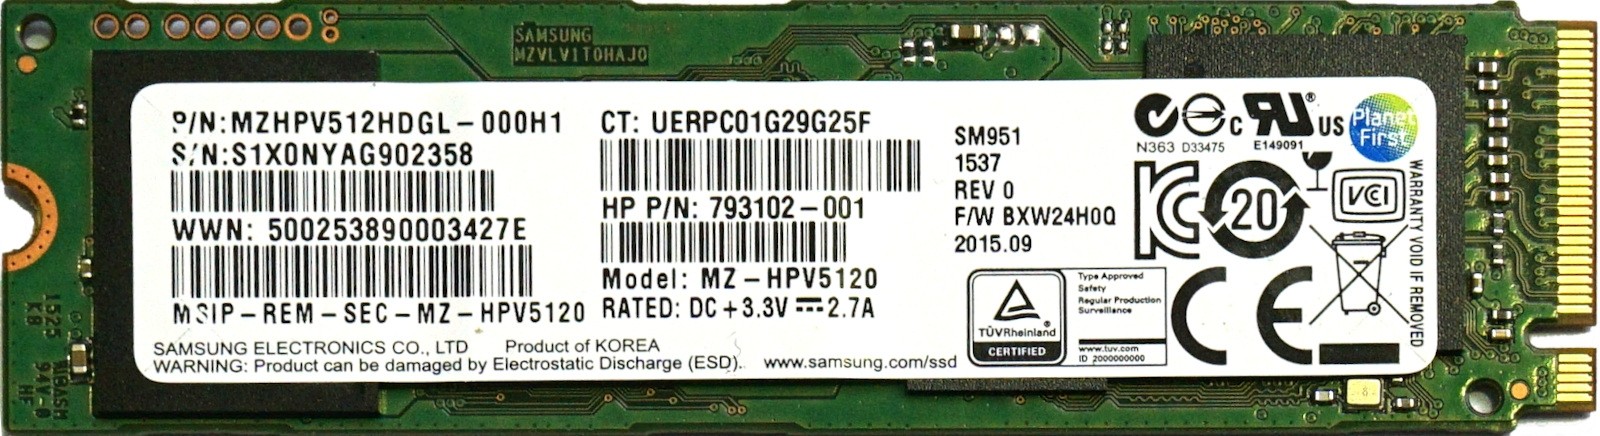 HP (793102-001) 512GB Samsung SM951 NVMe (M.2 2280) SSD